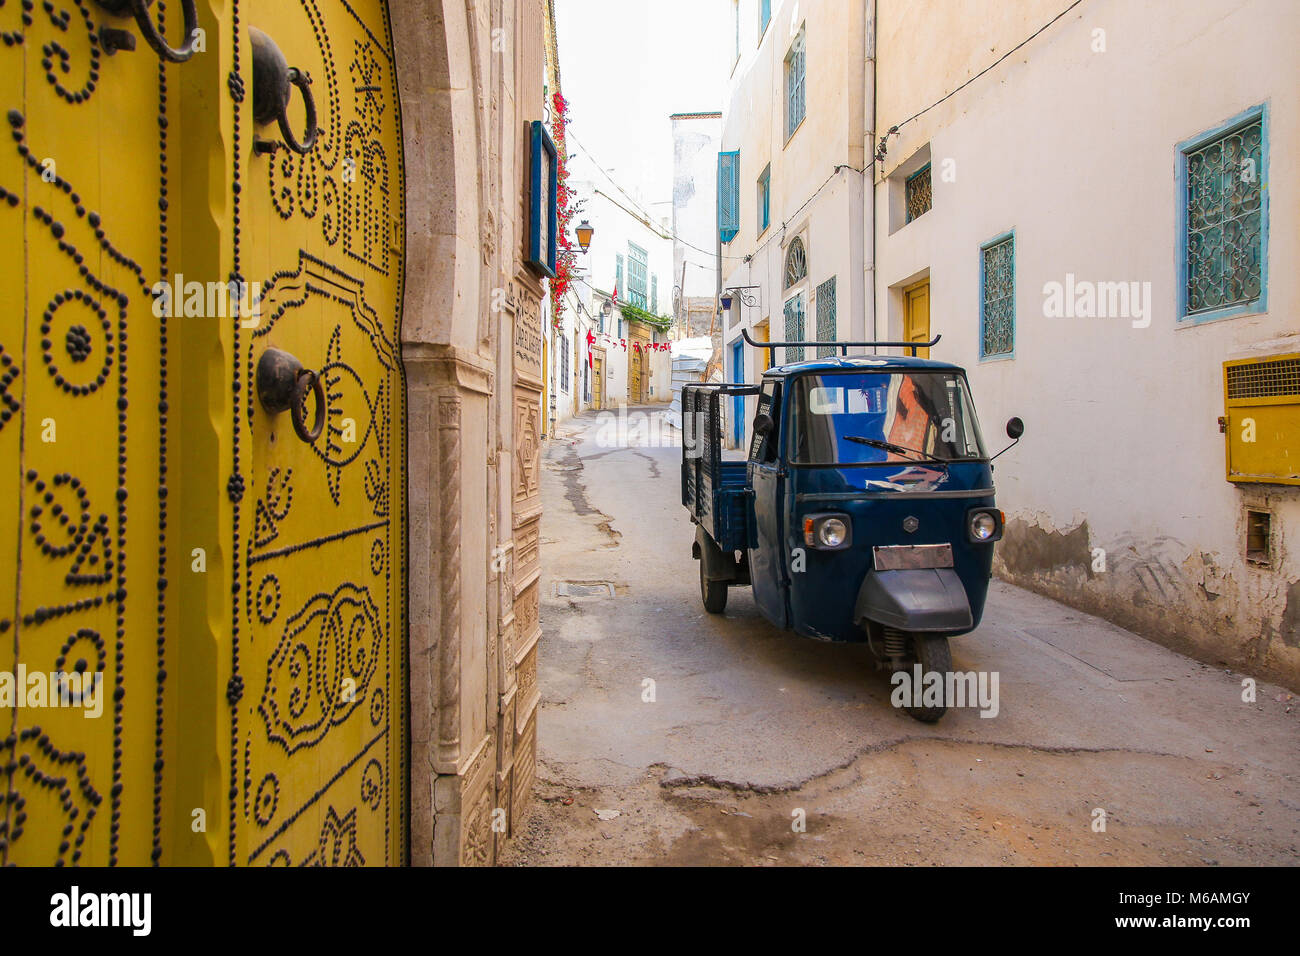 Puerta tradicional tunecina en Túnez, la capital del país islámico. Foto de stock